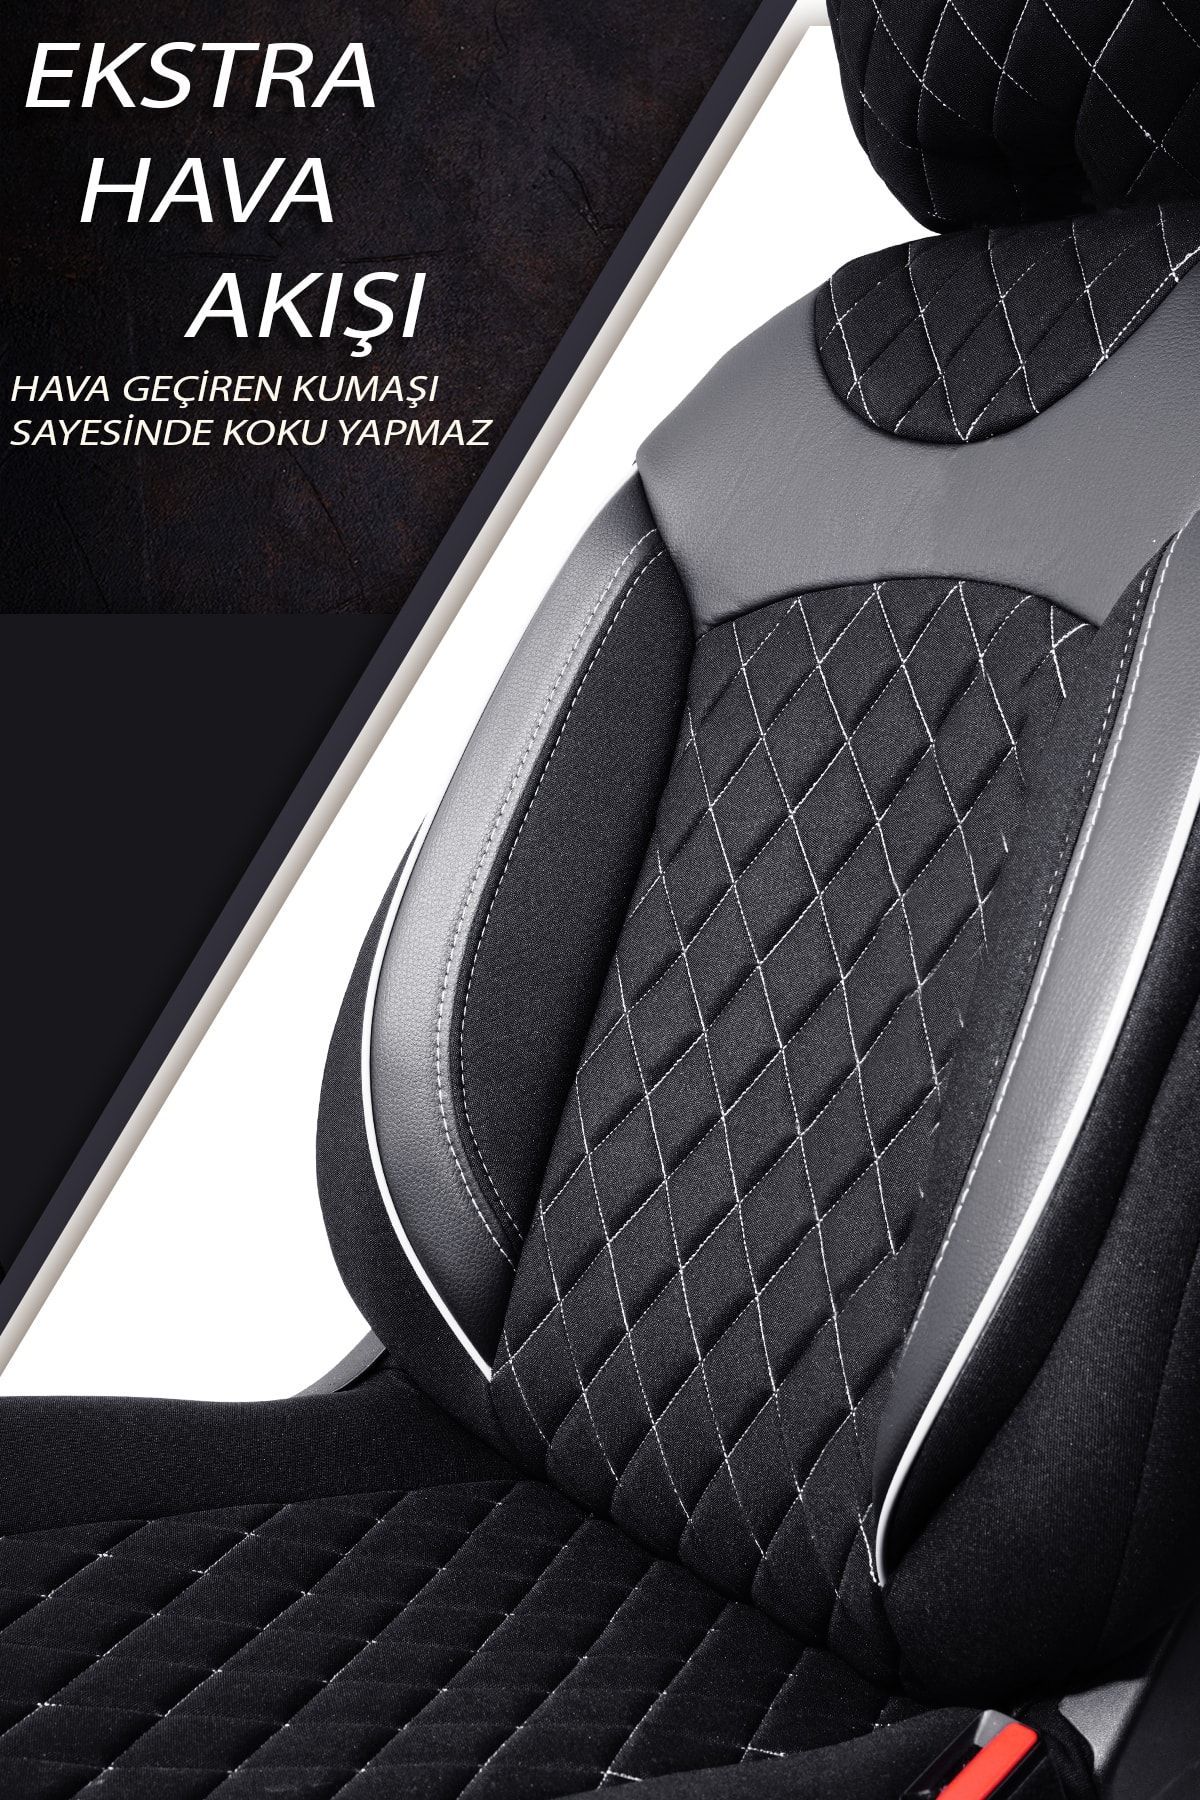 PlusOto Honda Accord Compatible Anka Series Black-white Car Seat